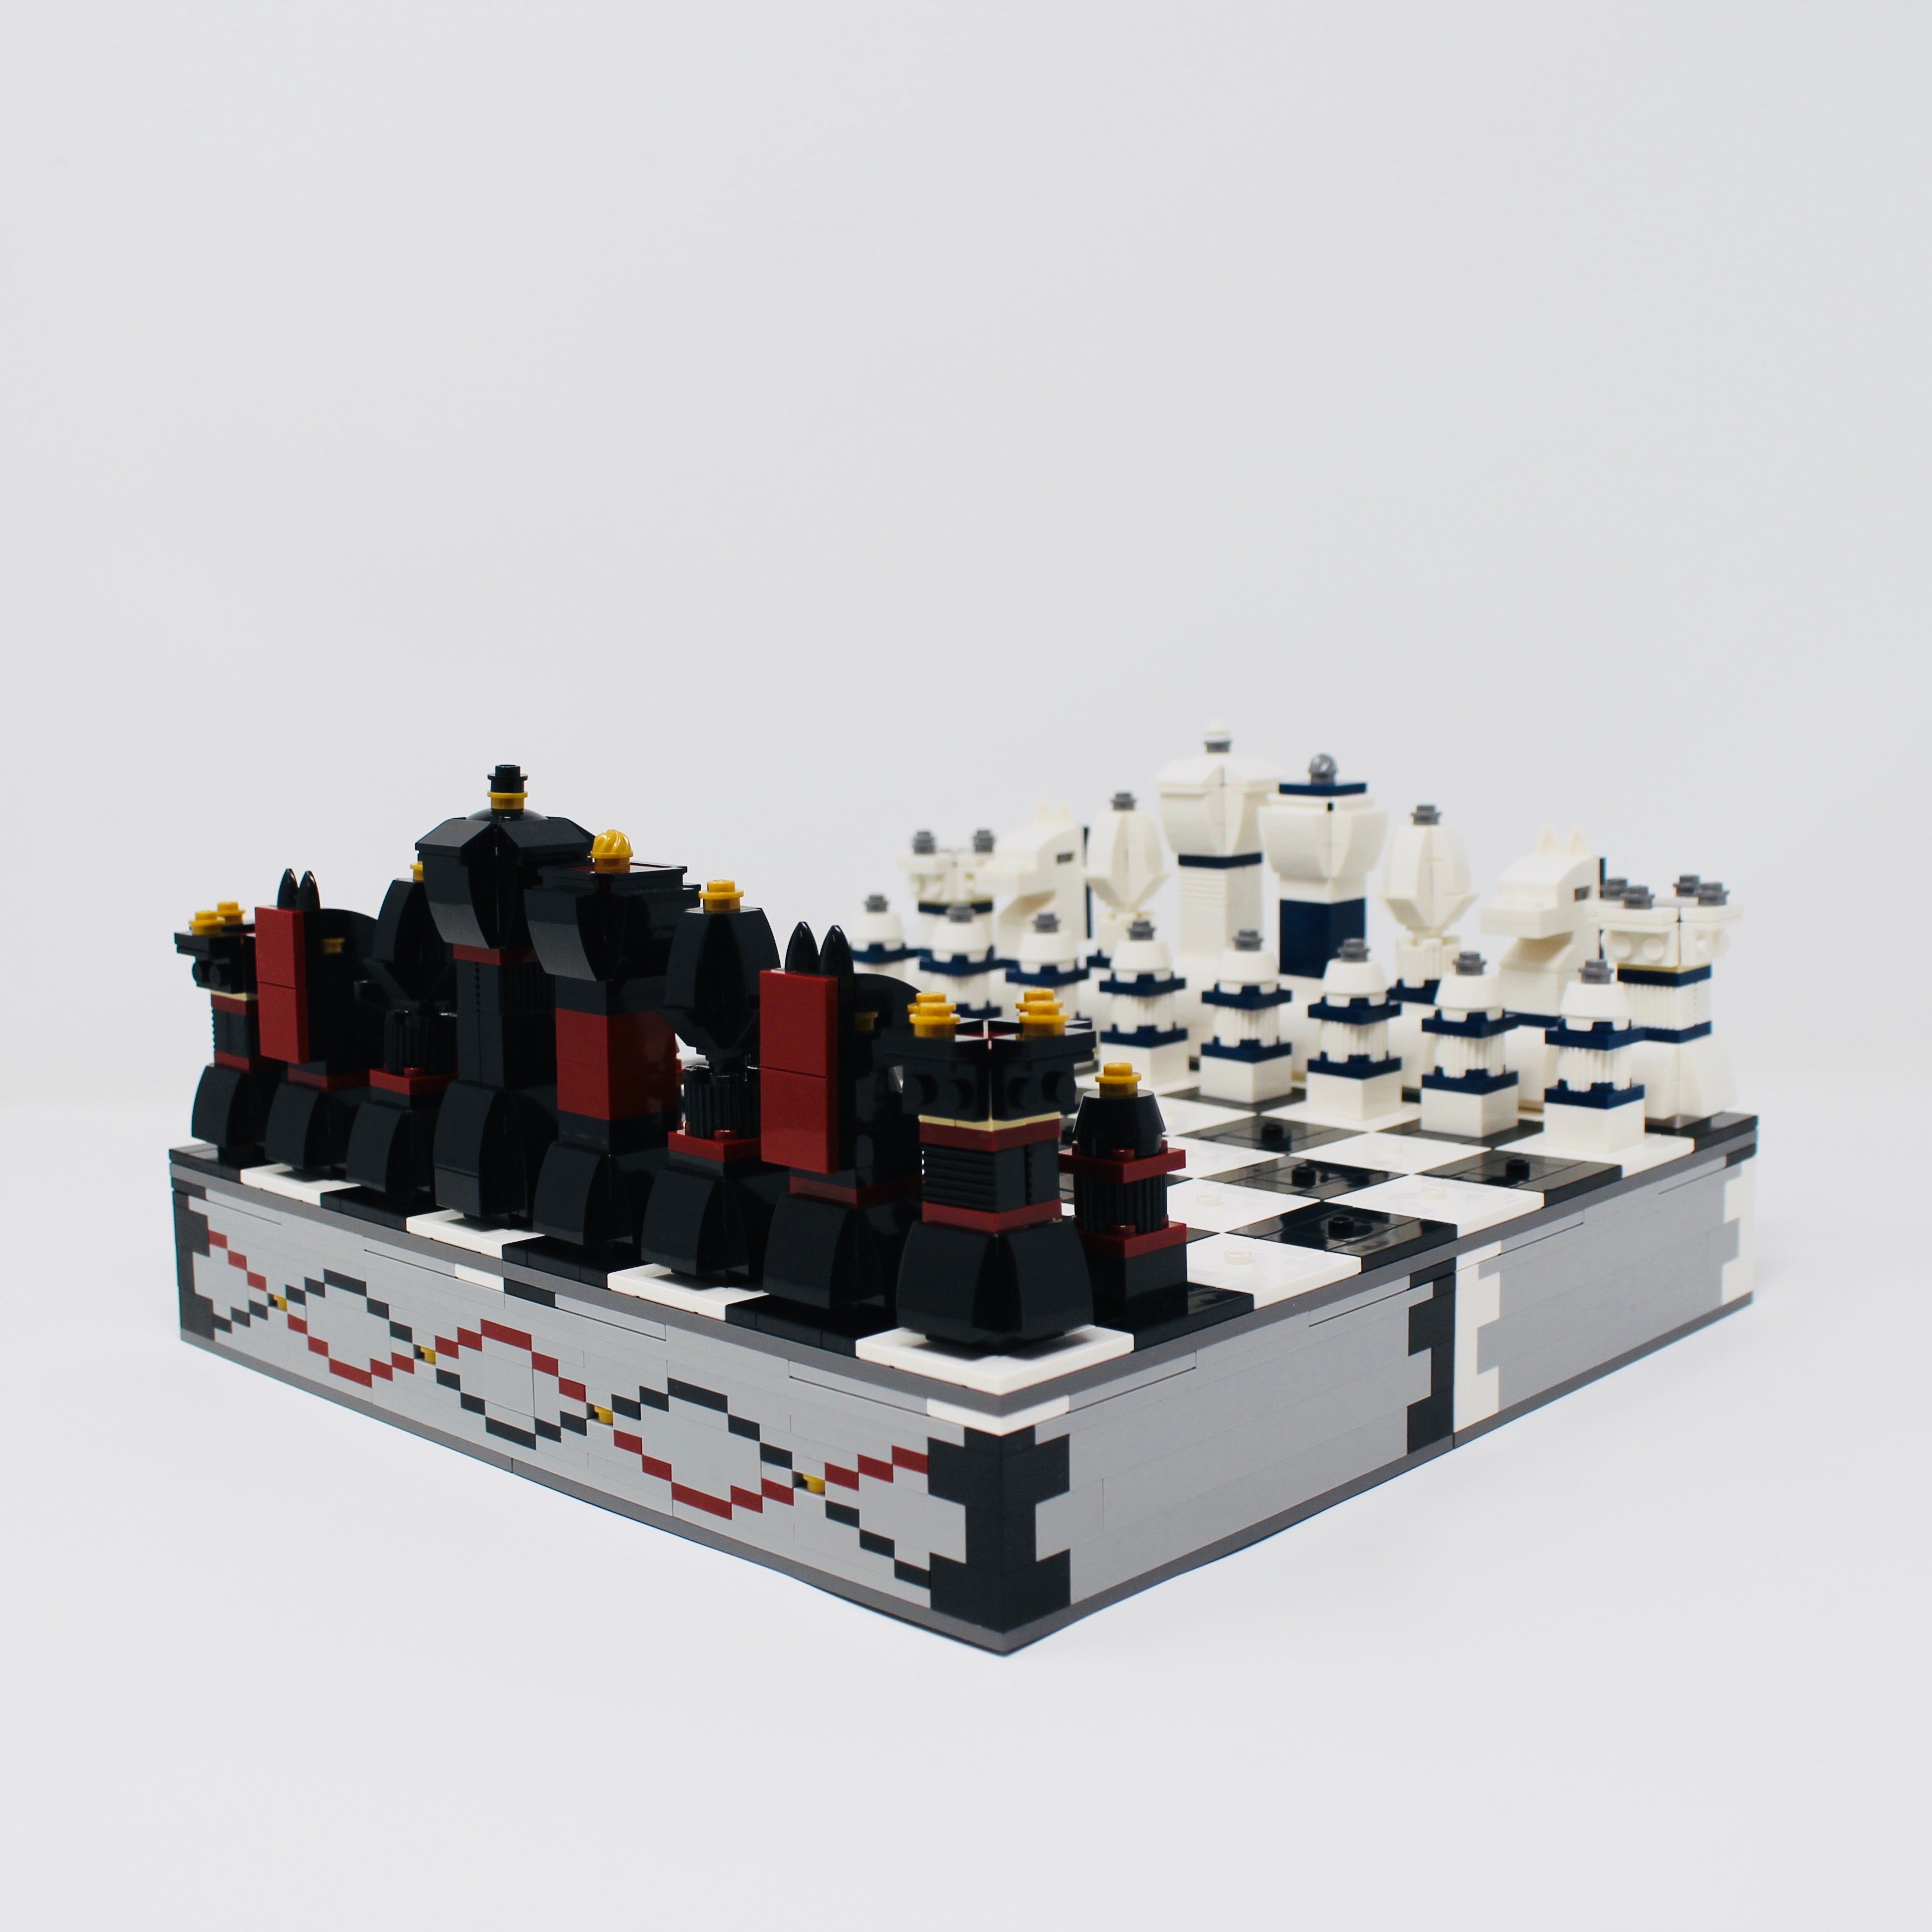 Set 40174 LEGO Chess Set